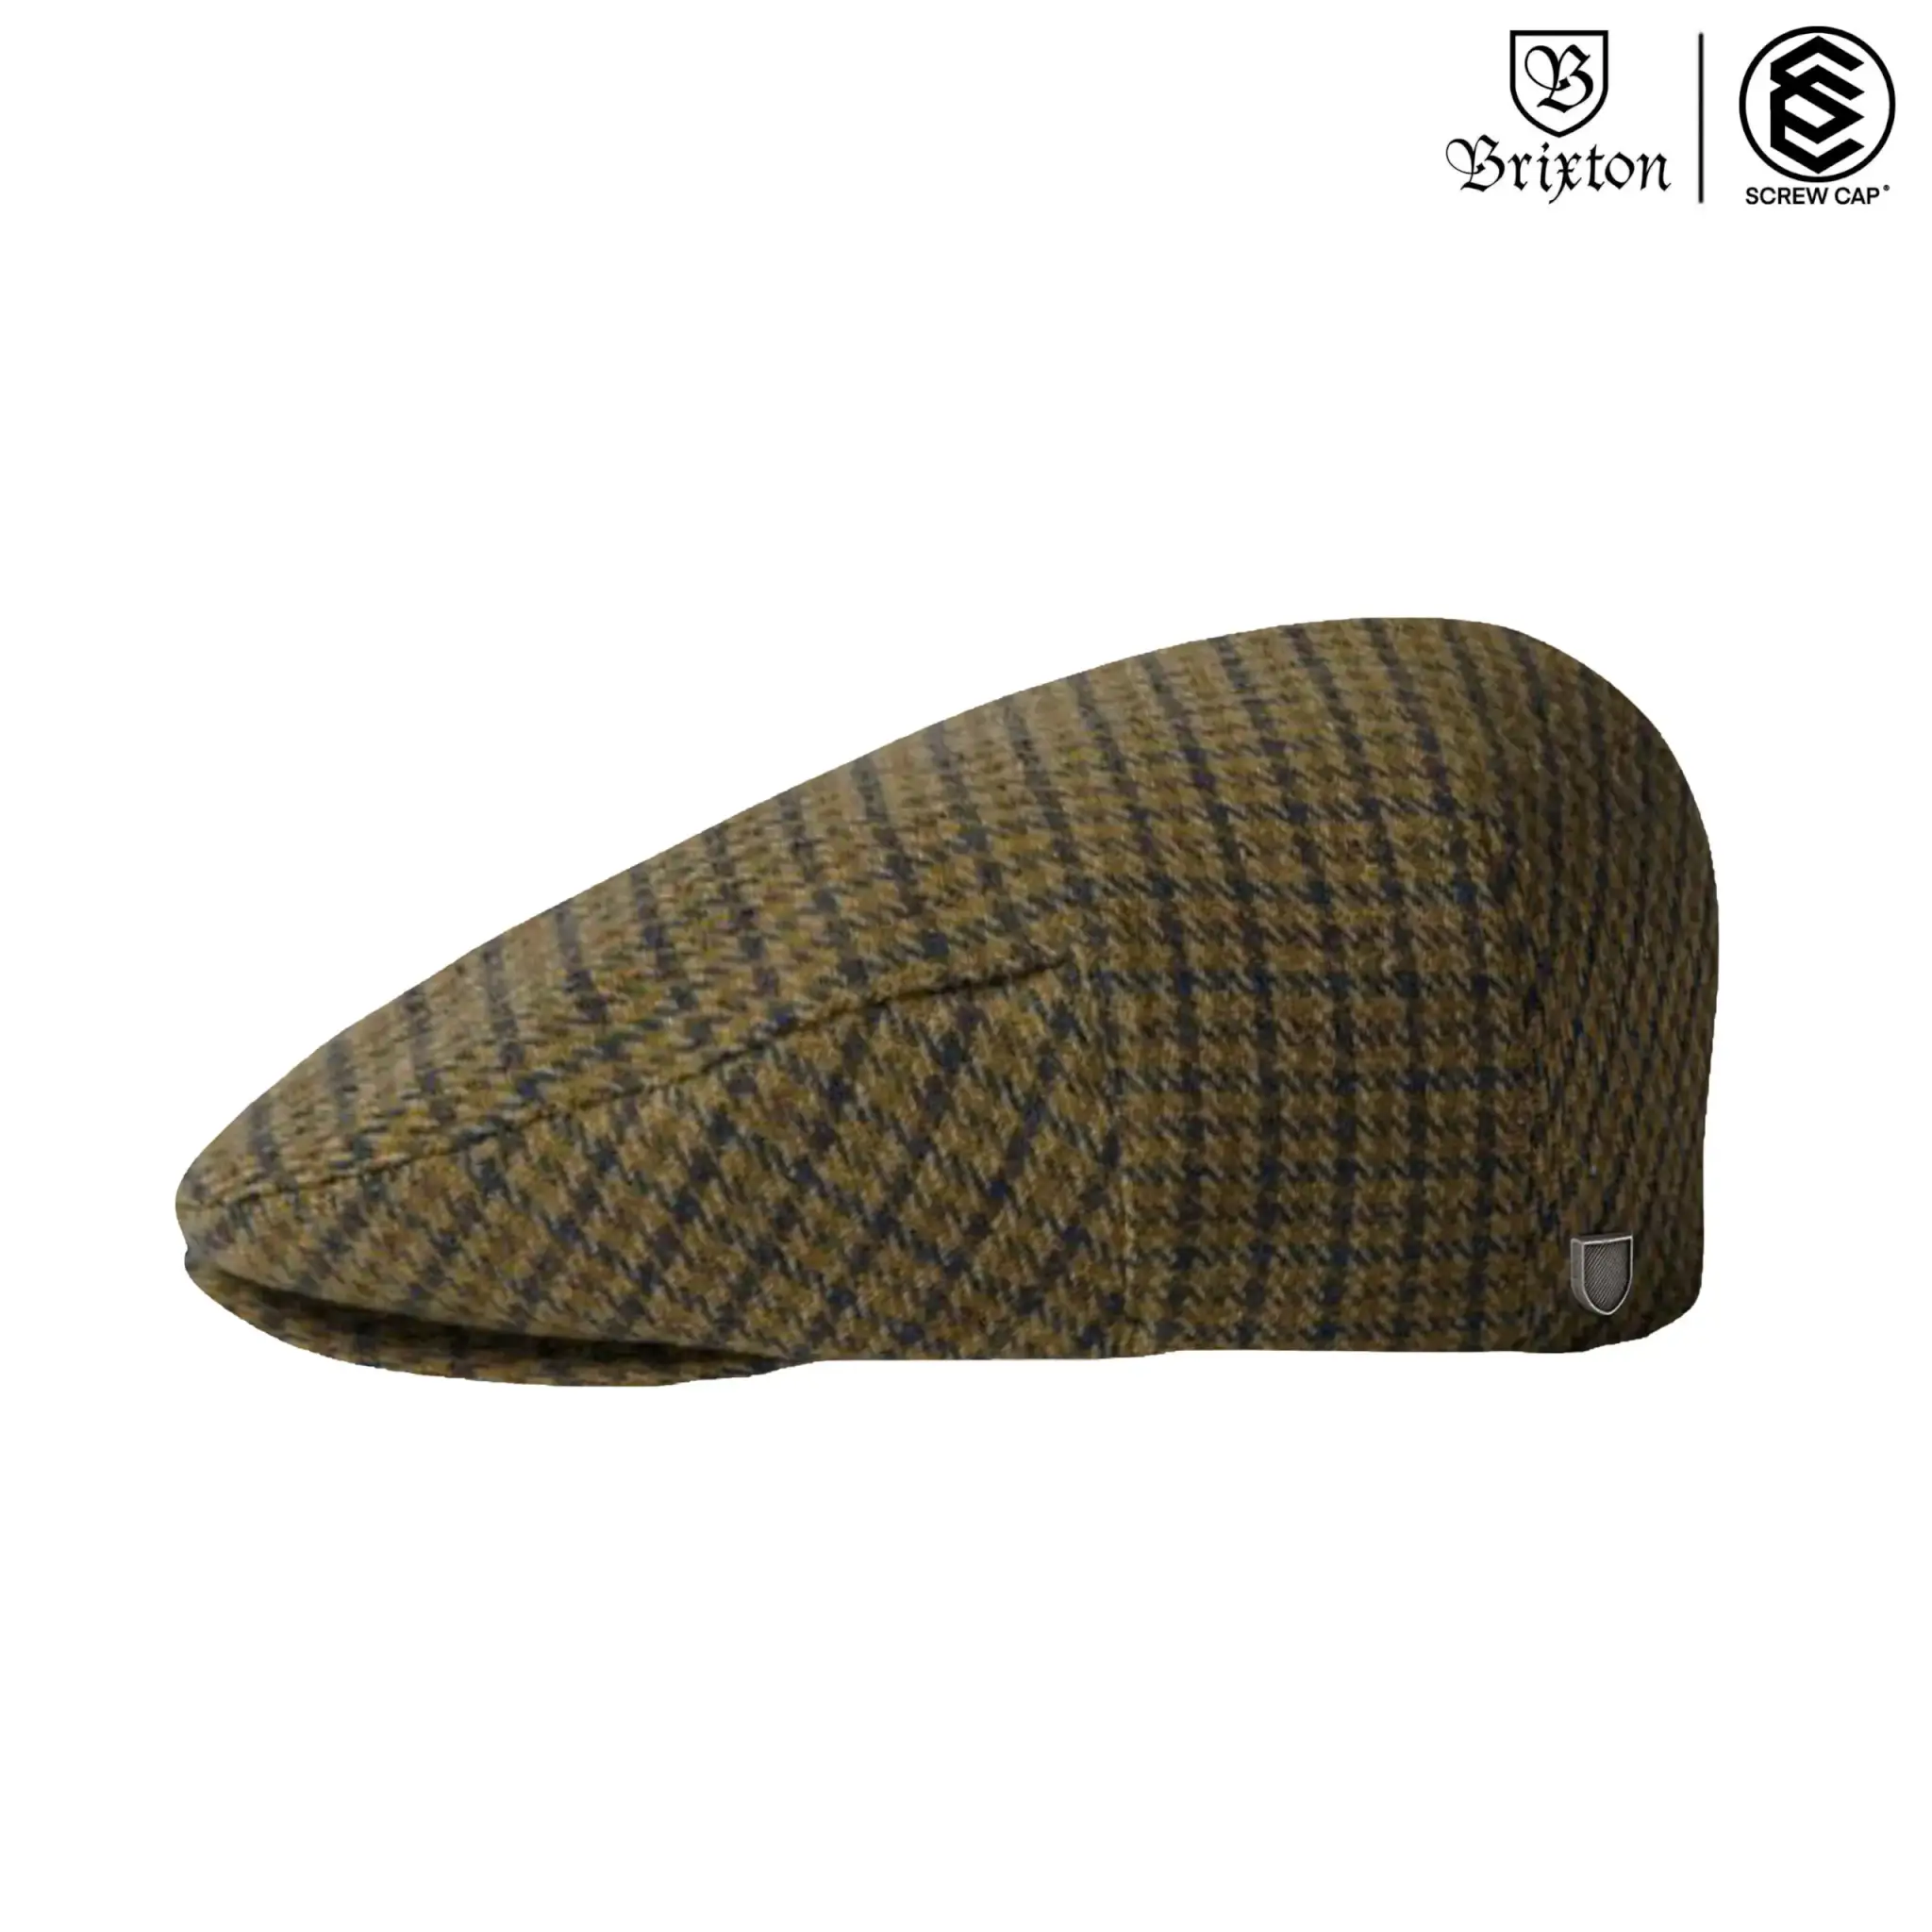 BRIXTON 小偷帽 HOOLIGAN SNAP CAP LIGHT OLIVE/BROWN 復古⫷ScrewCap⫸ | SCREWCAP帽子專賣店